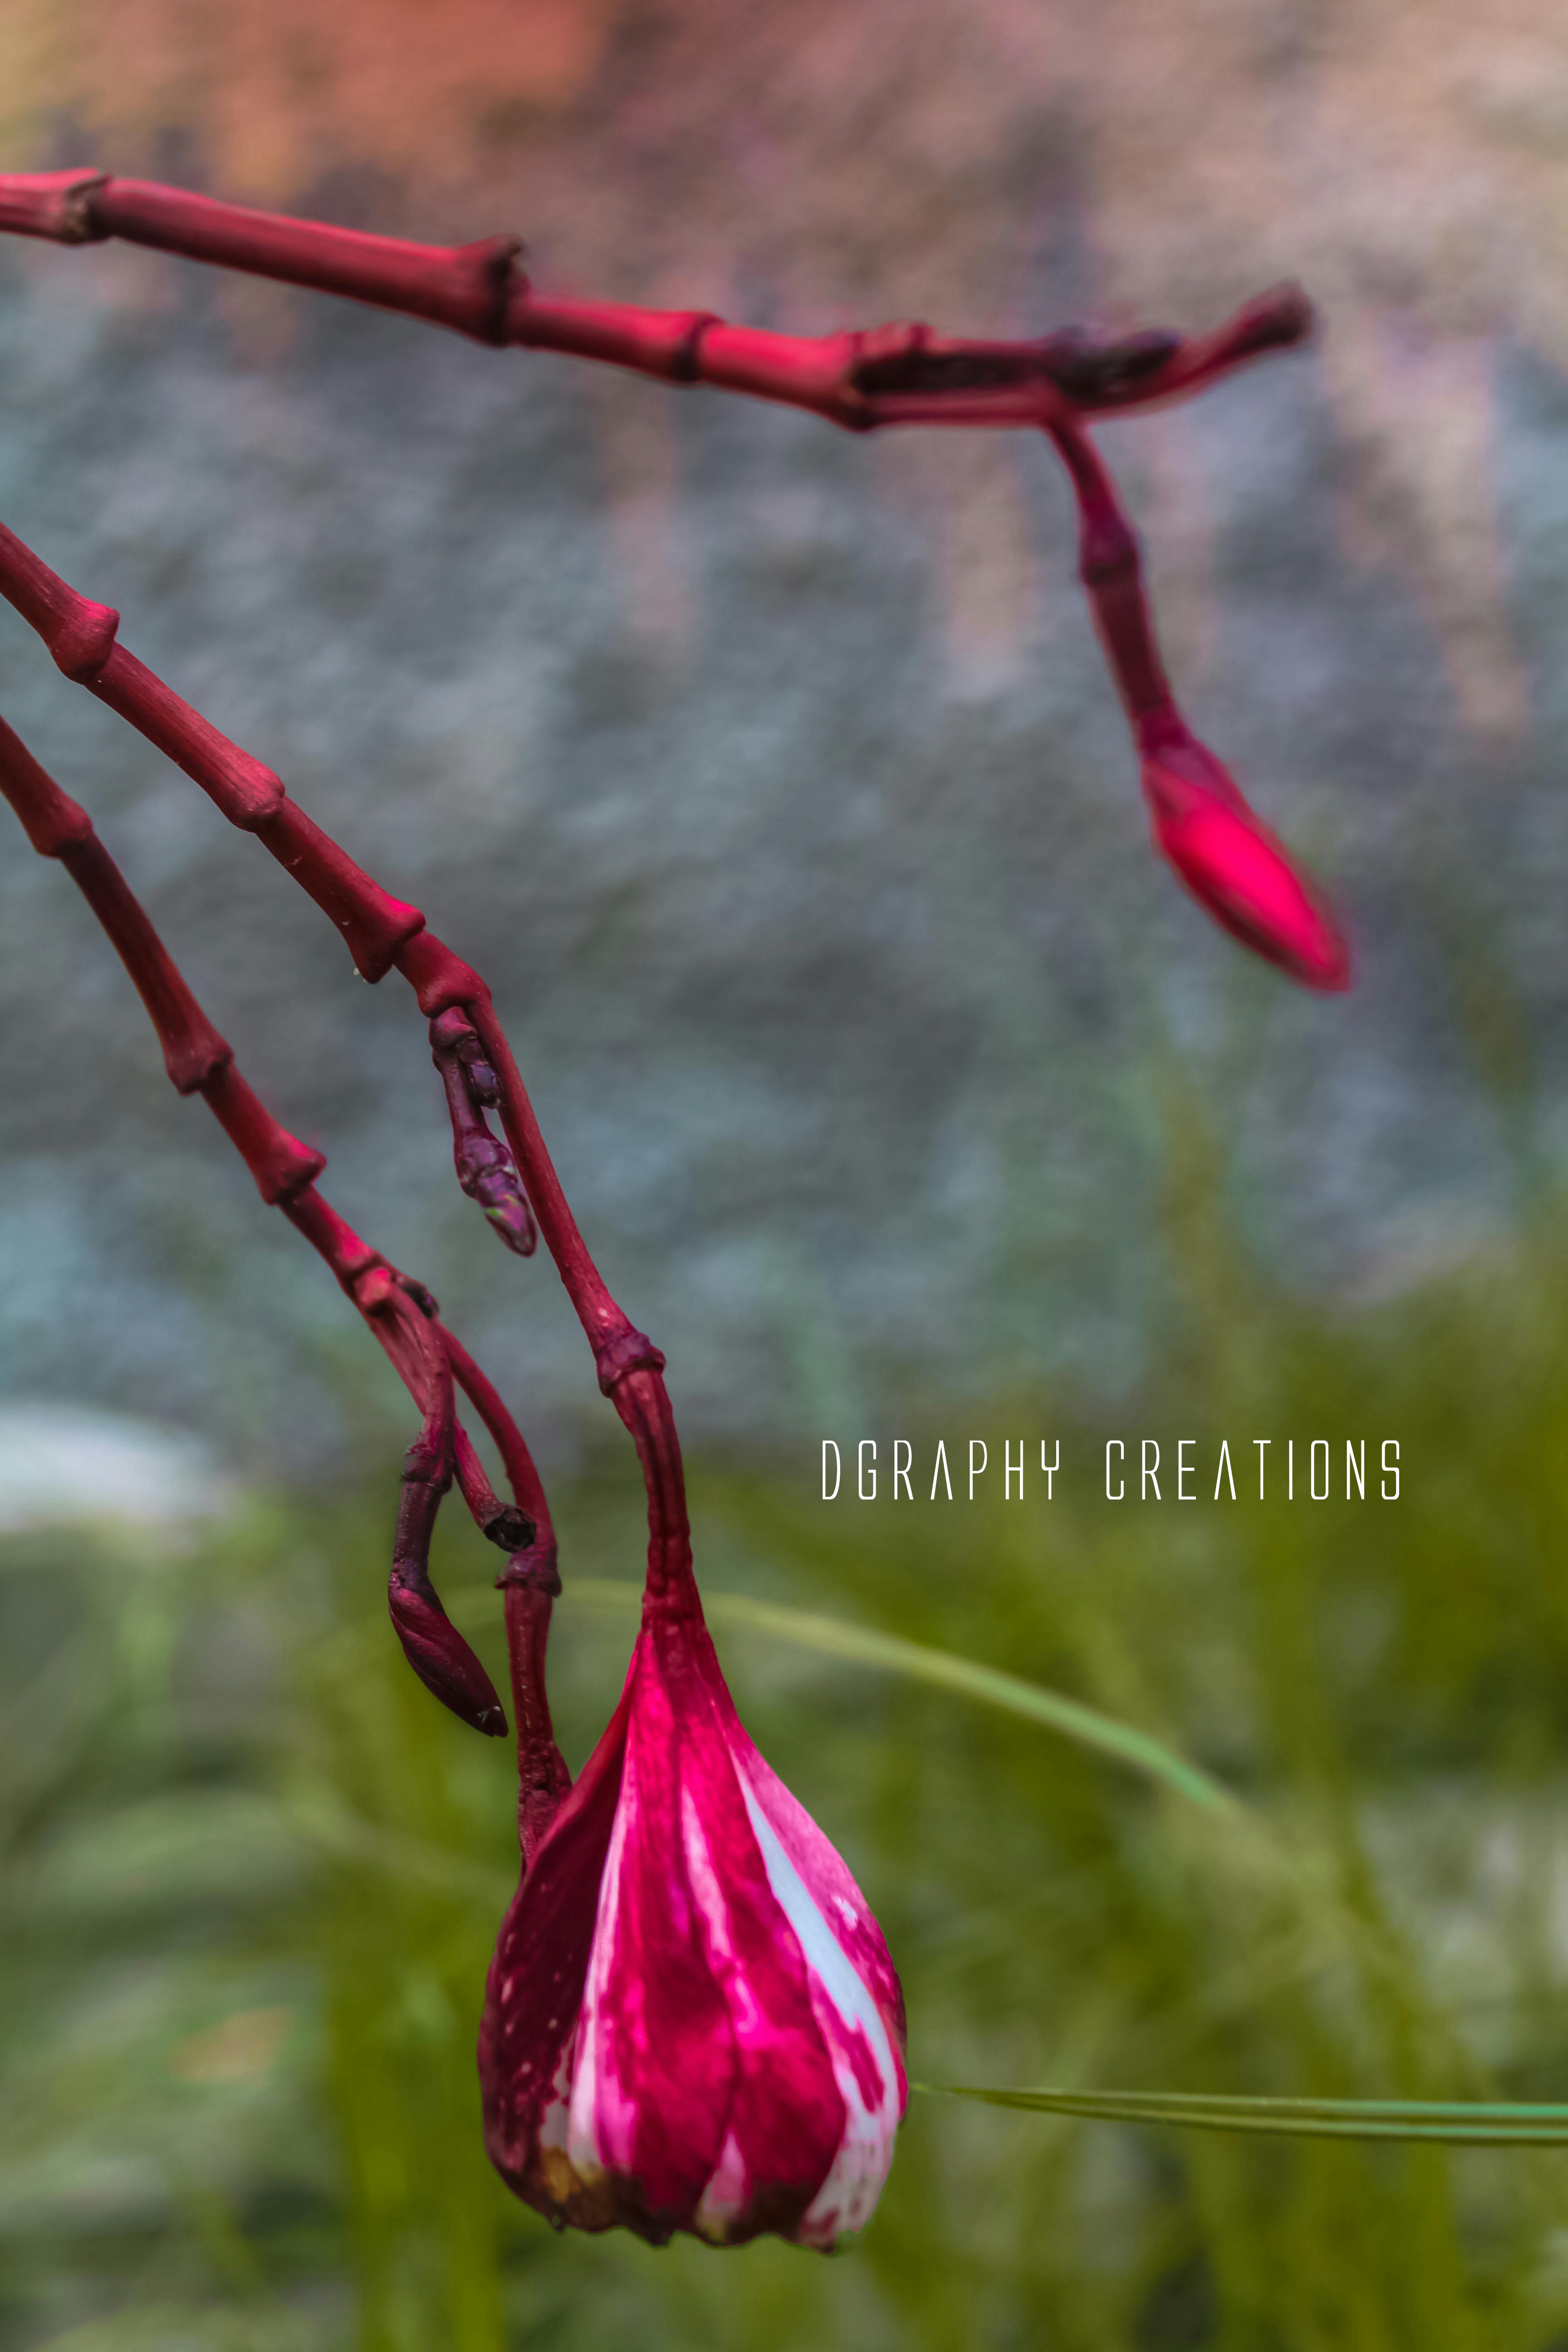 Free stock photo of Adobe Photoshop, amazing, beautiful flowers